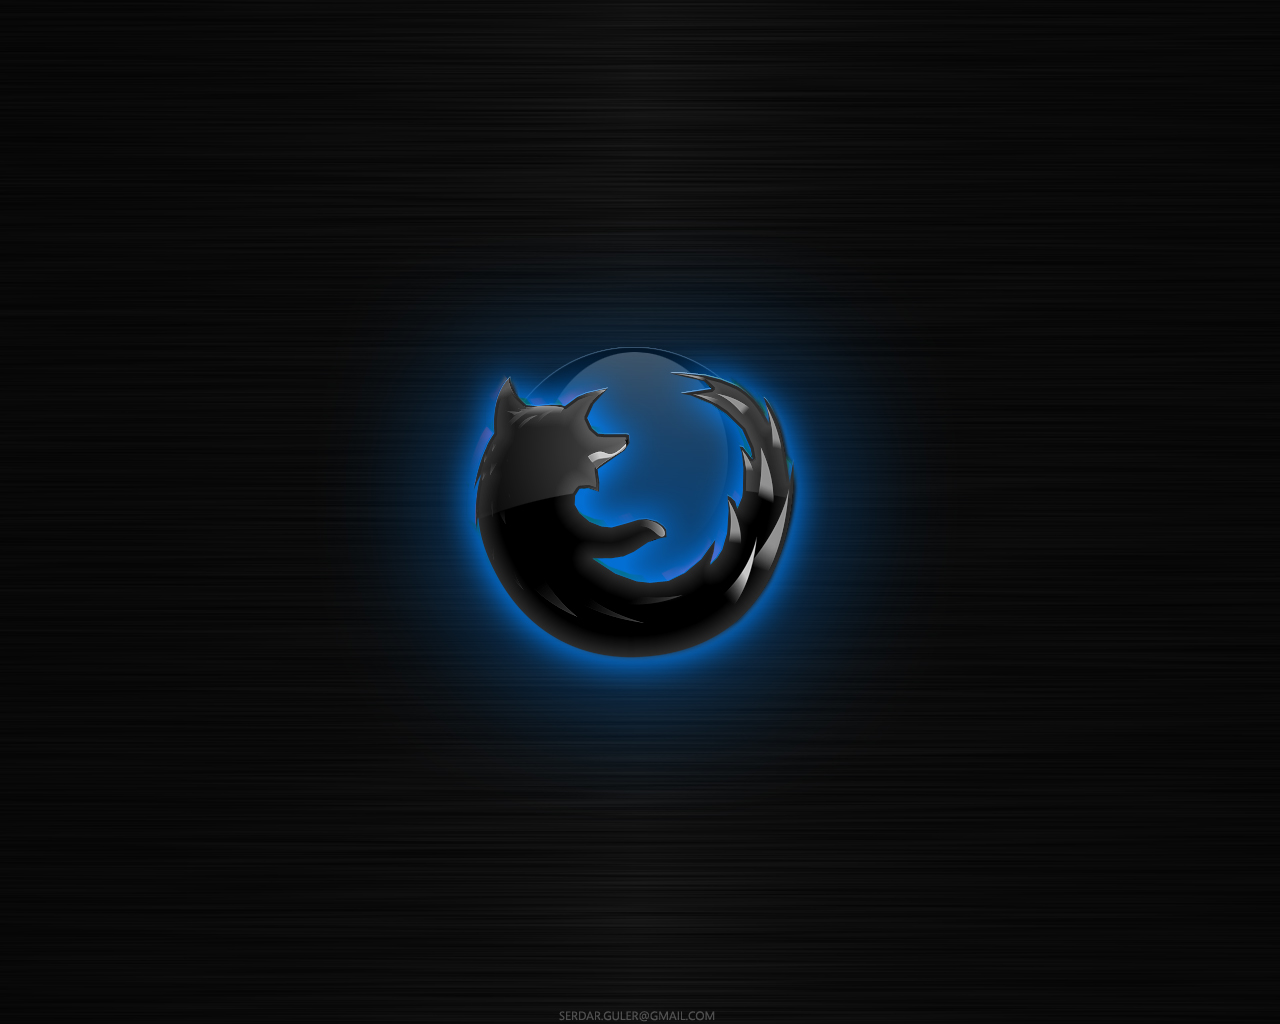 Firefox Blackfox Edition Wallpaper